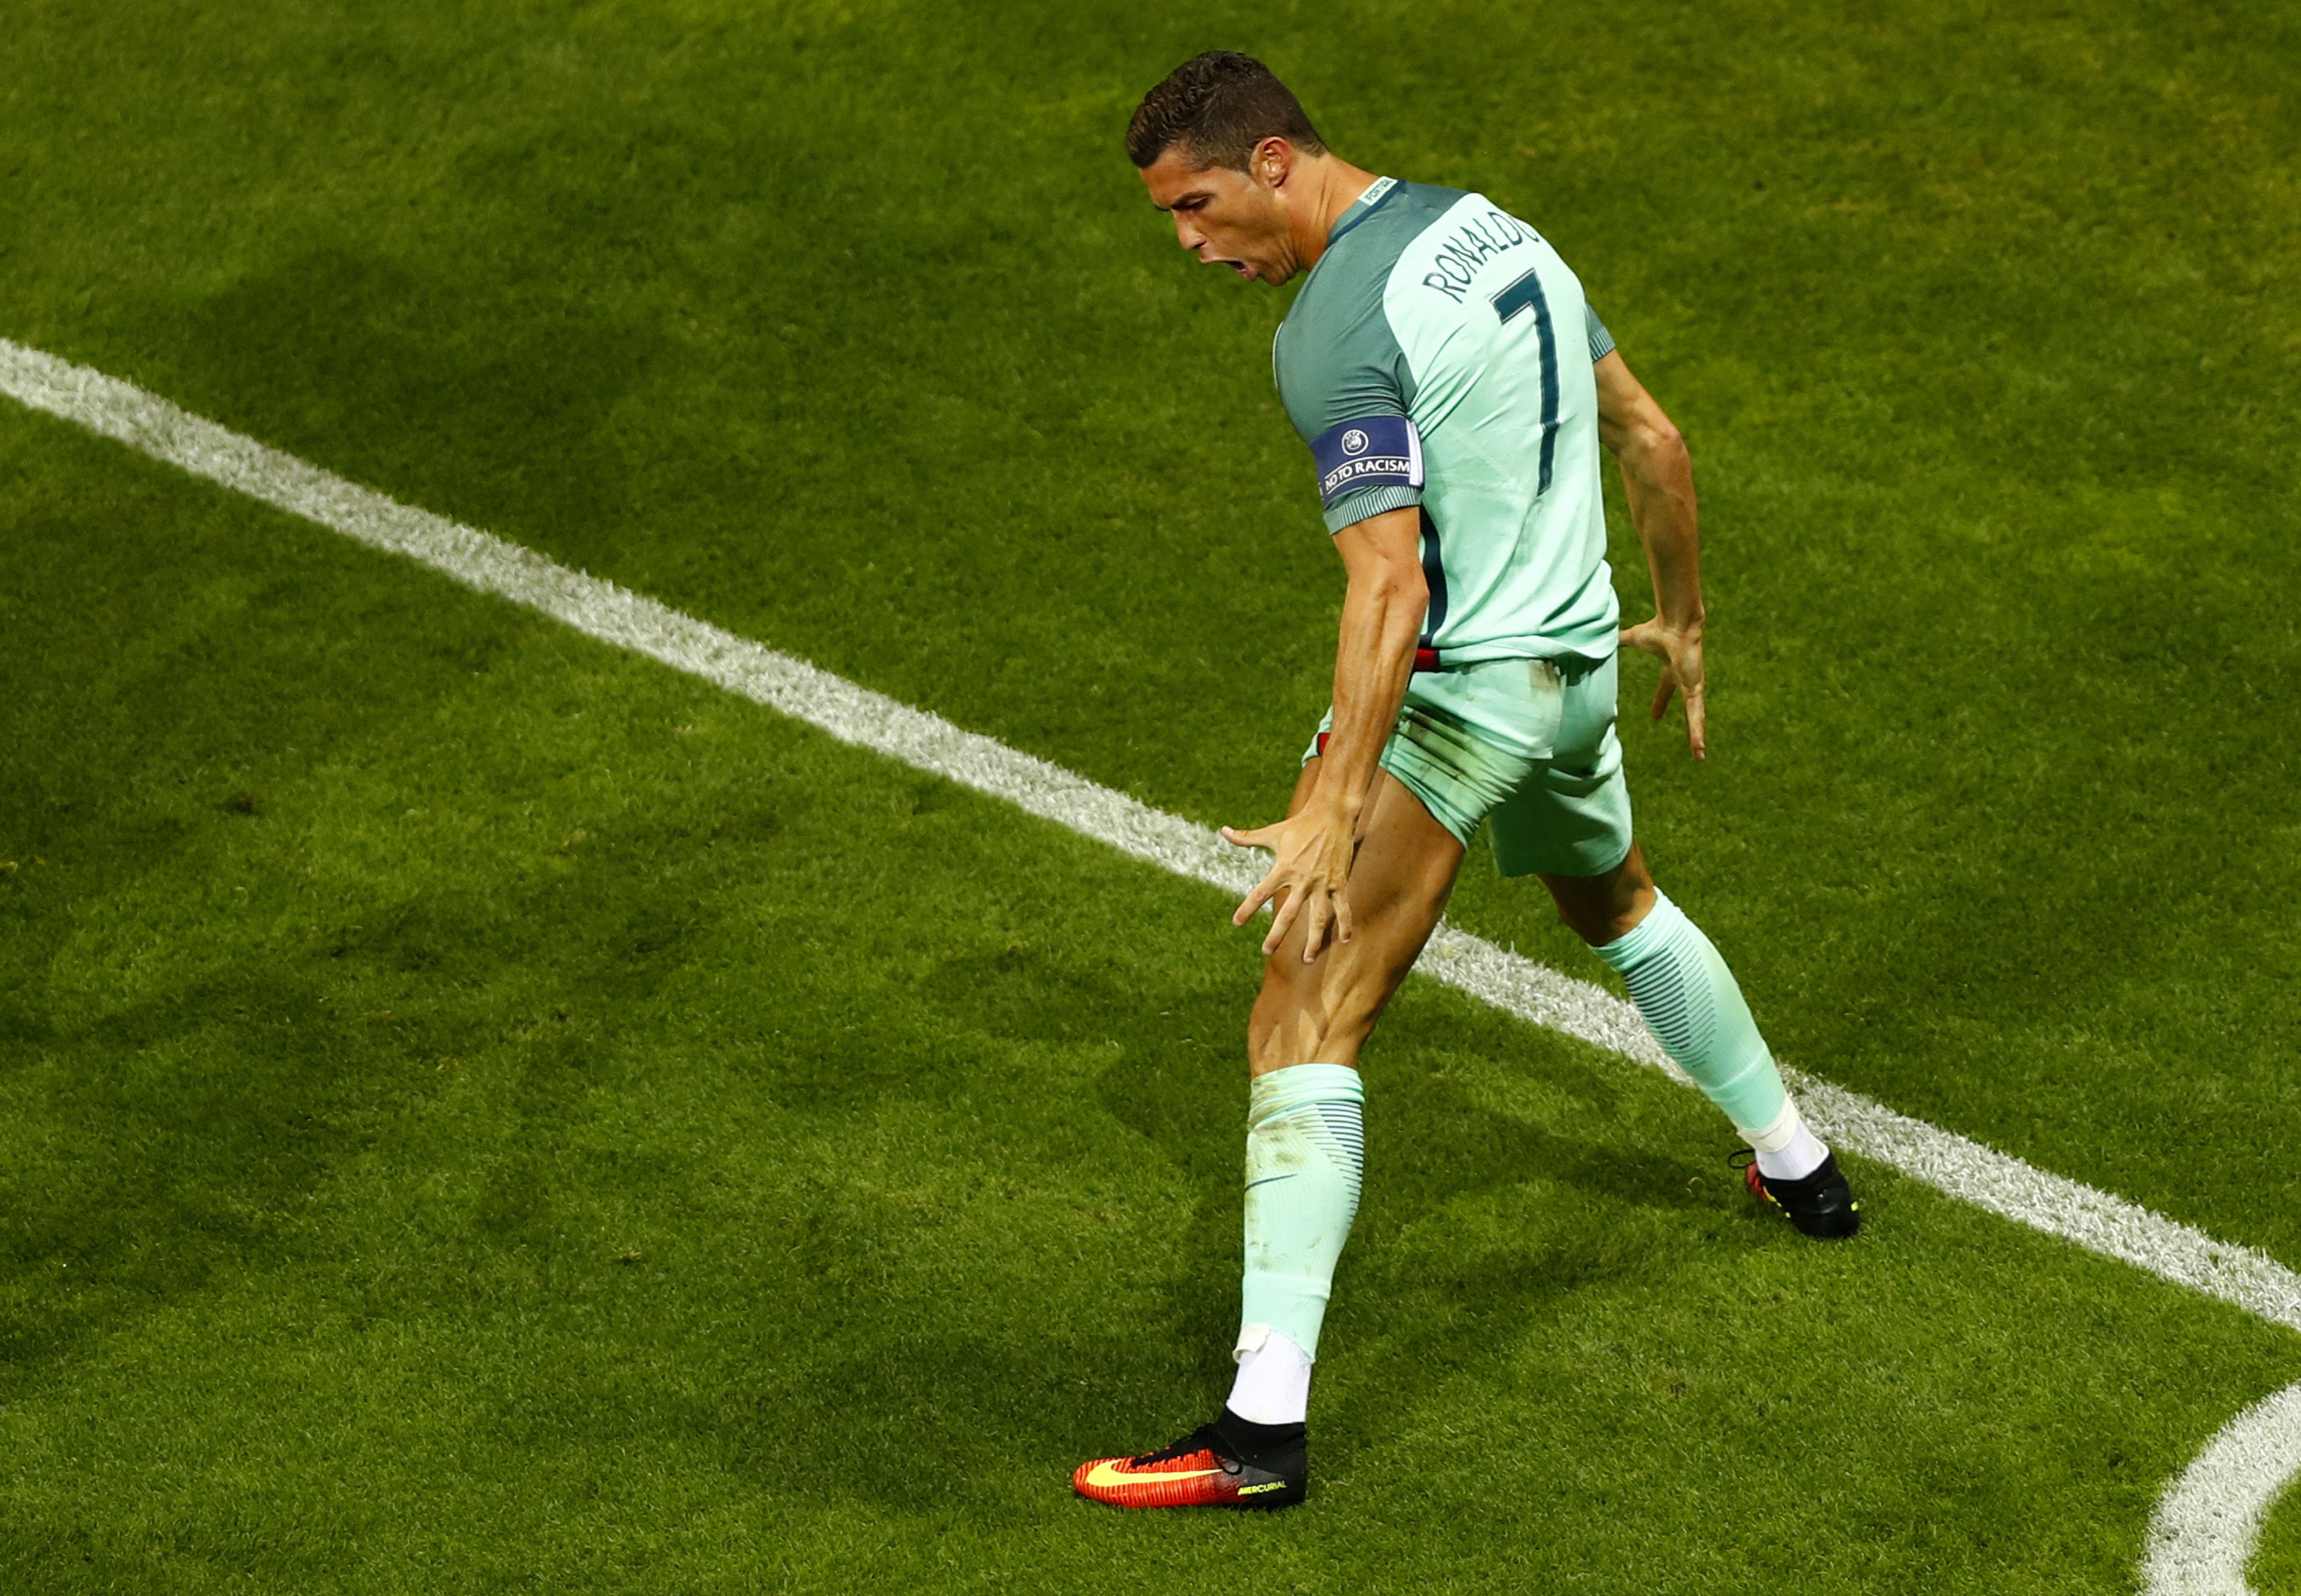 Euro 2016 | Cristiano Ronaldo fires Portugal into final past Wales